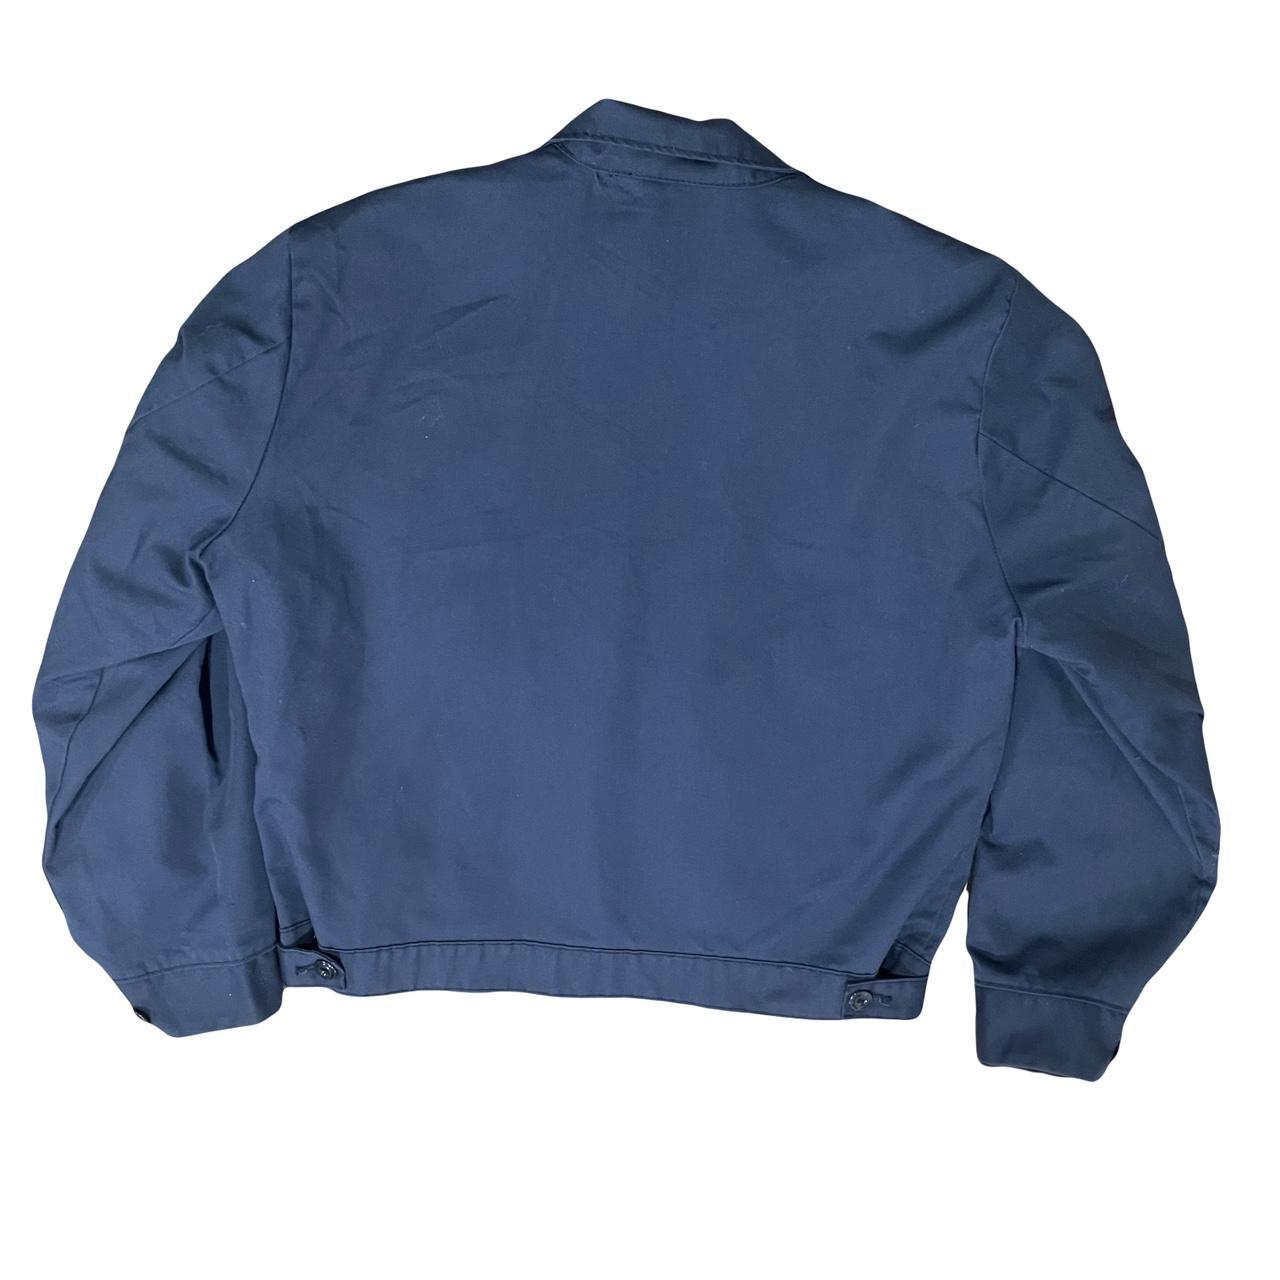 Navy blue Pepsi zip up workwear bomber jacket with... - Depop